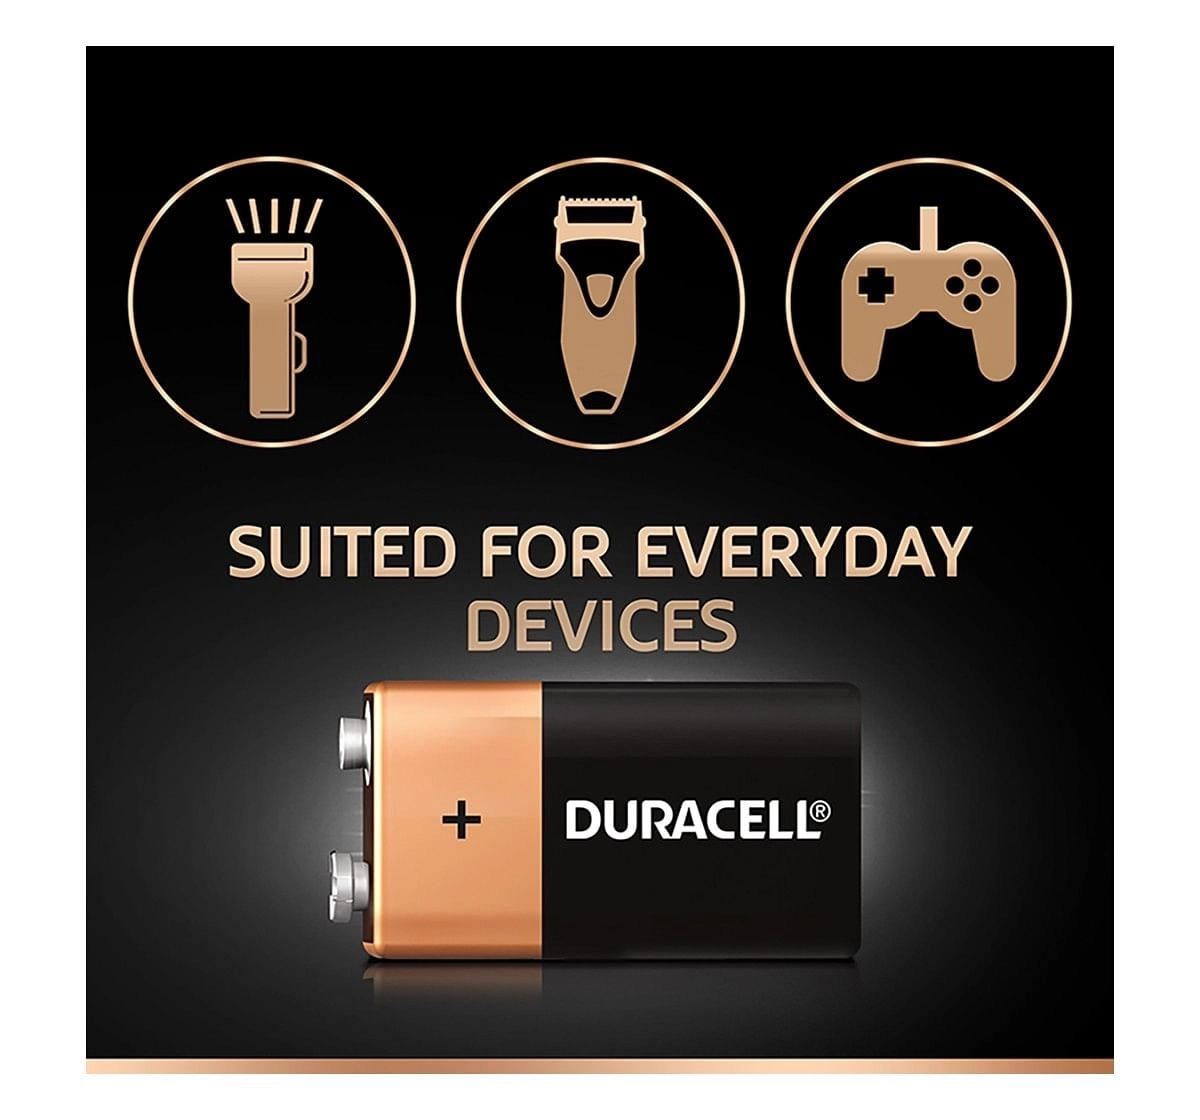 Duracell 9V Alkaline Batteries-Pack of 2 Essentials for Kids age 3Y+ 